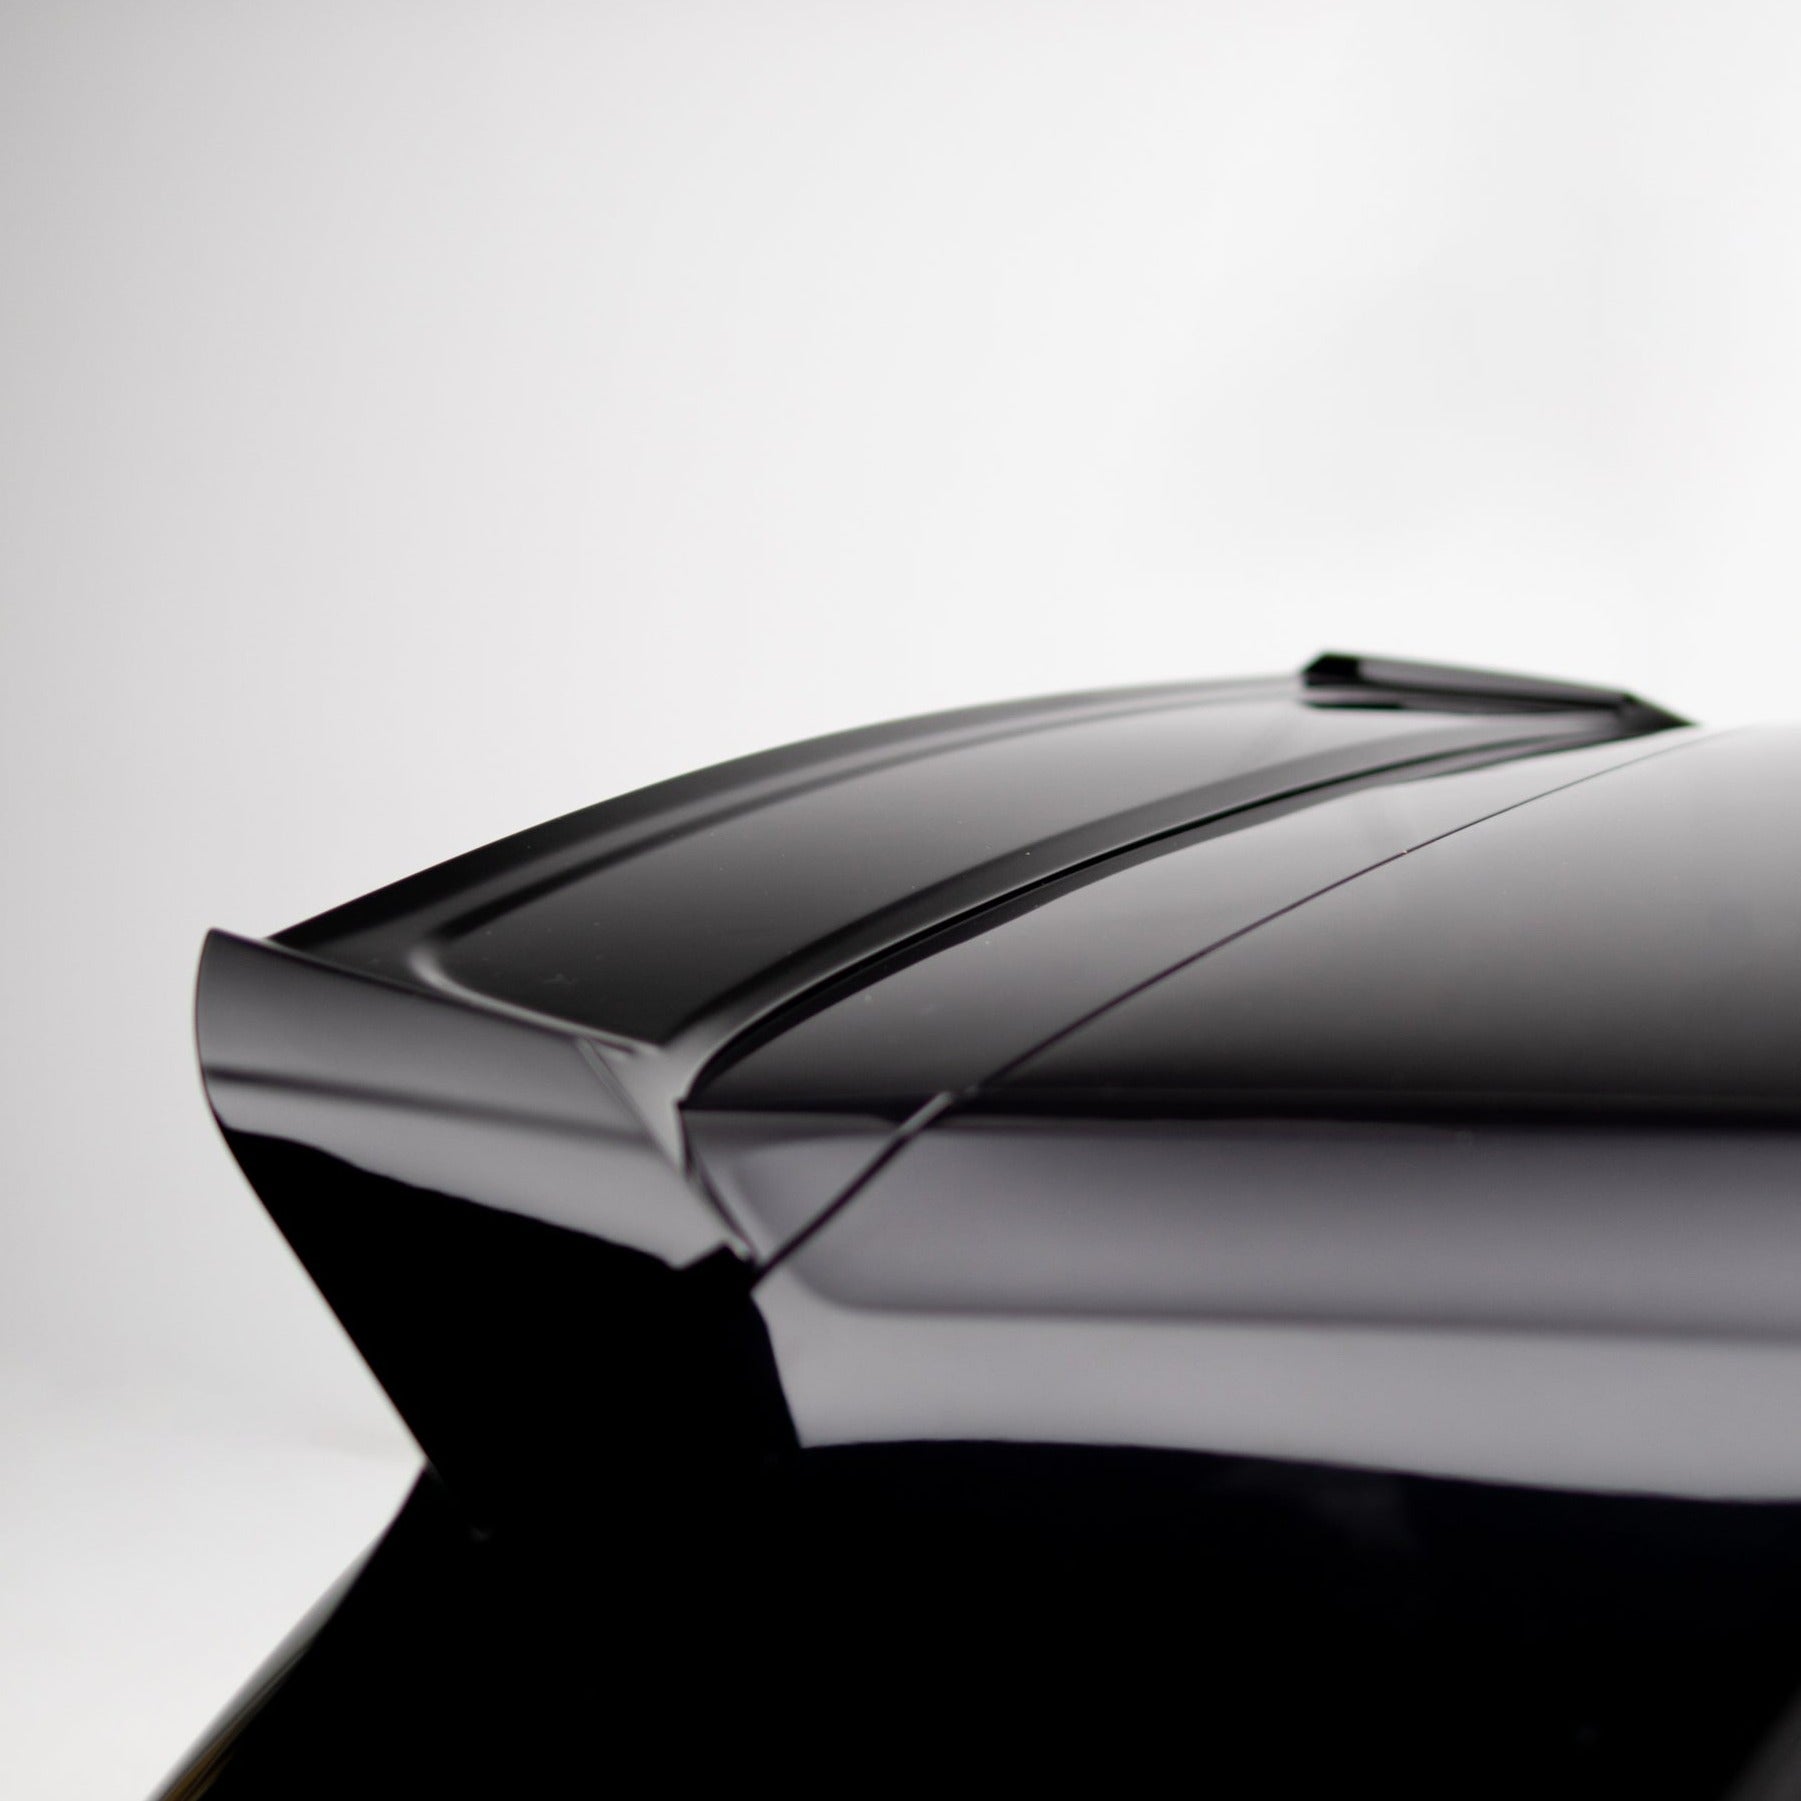 Zero Offset  OSIR Style Spoiler for Volkswagen Golf MK7/7.5 GTI/R - MODE Auto Concepts